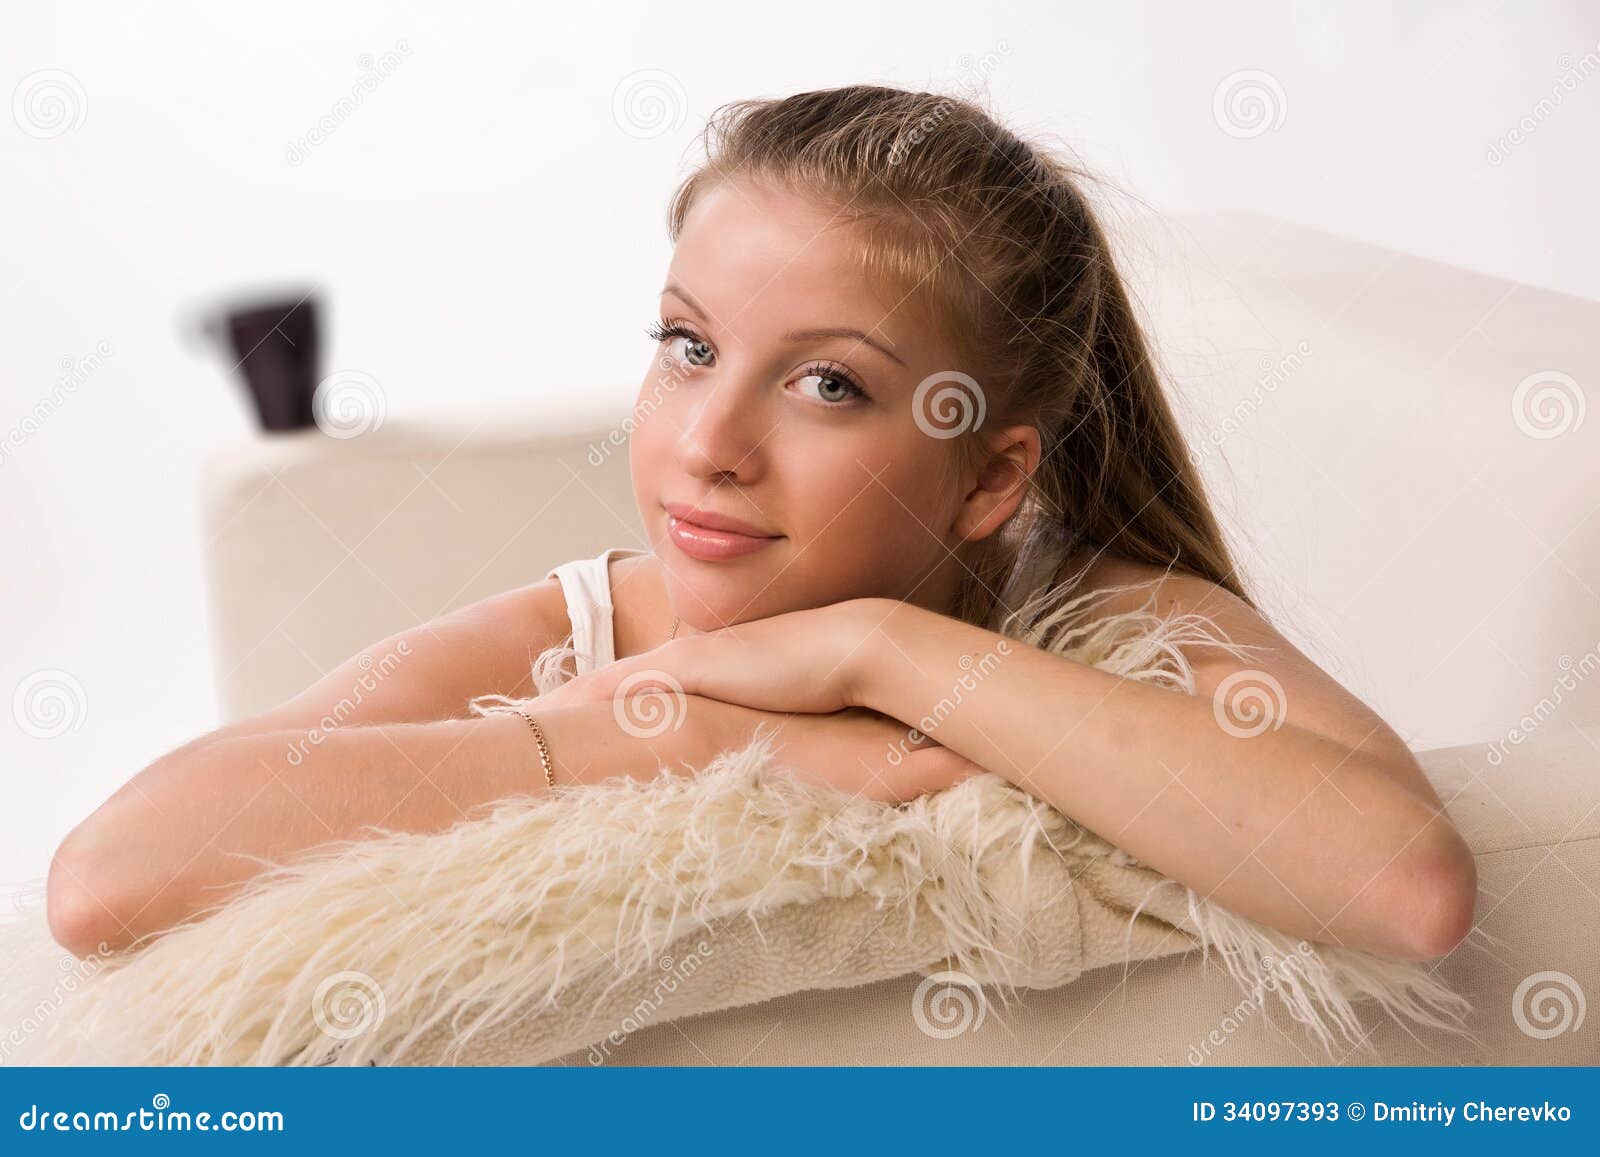 sensuality woman lying on a sofa